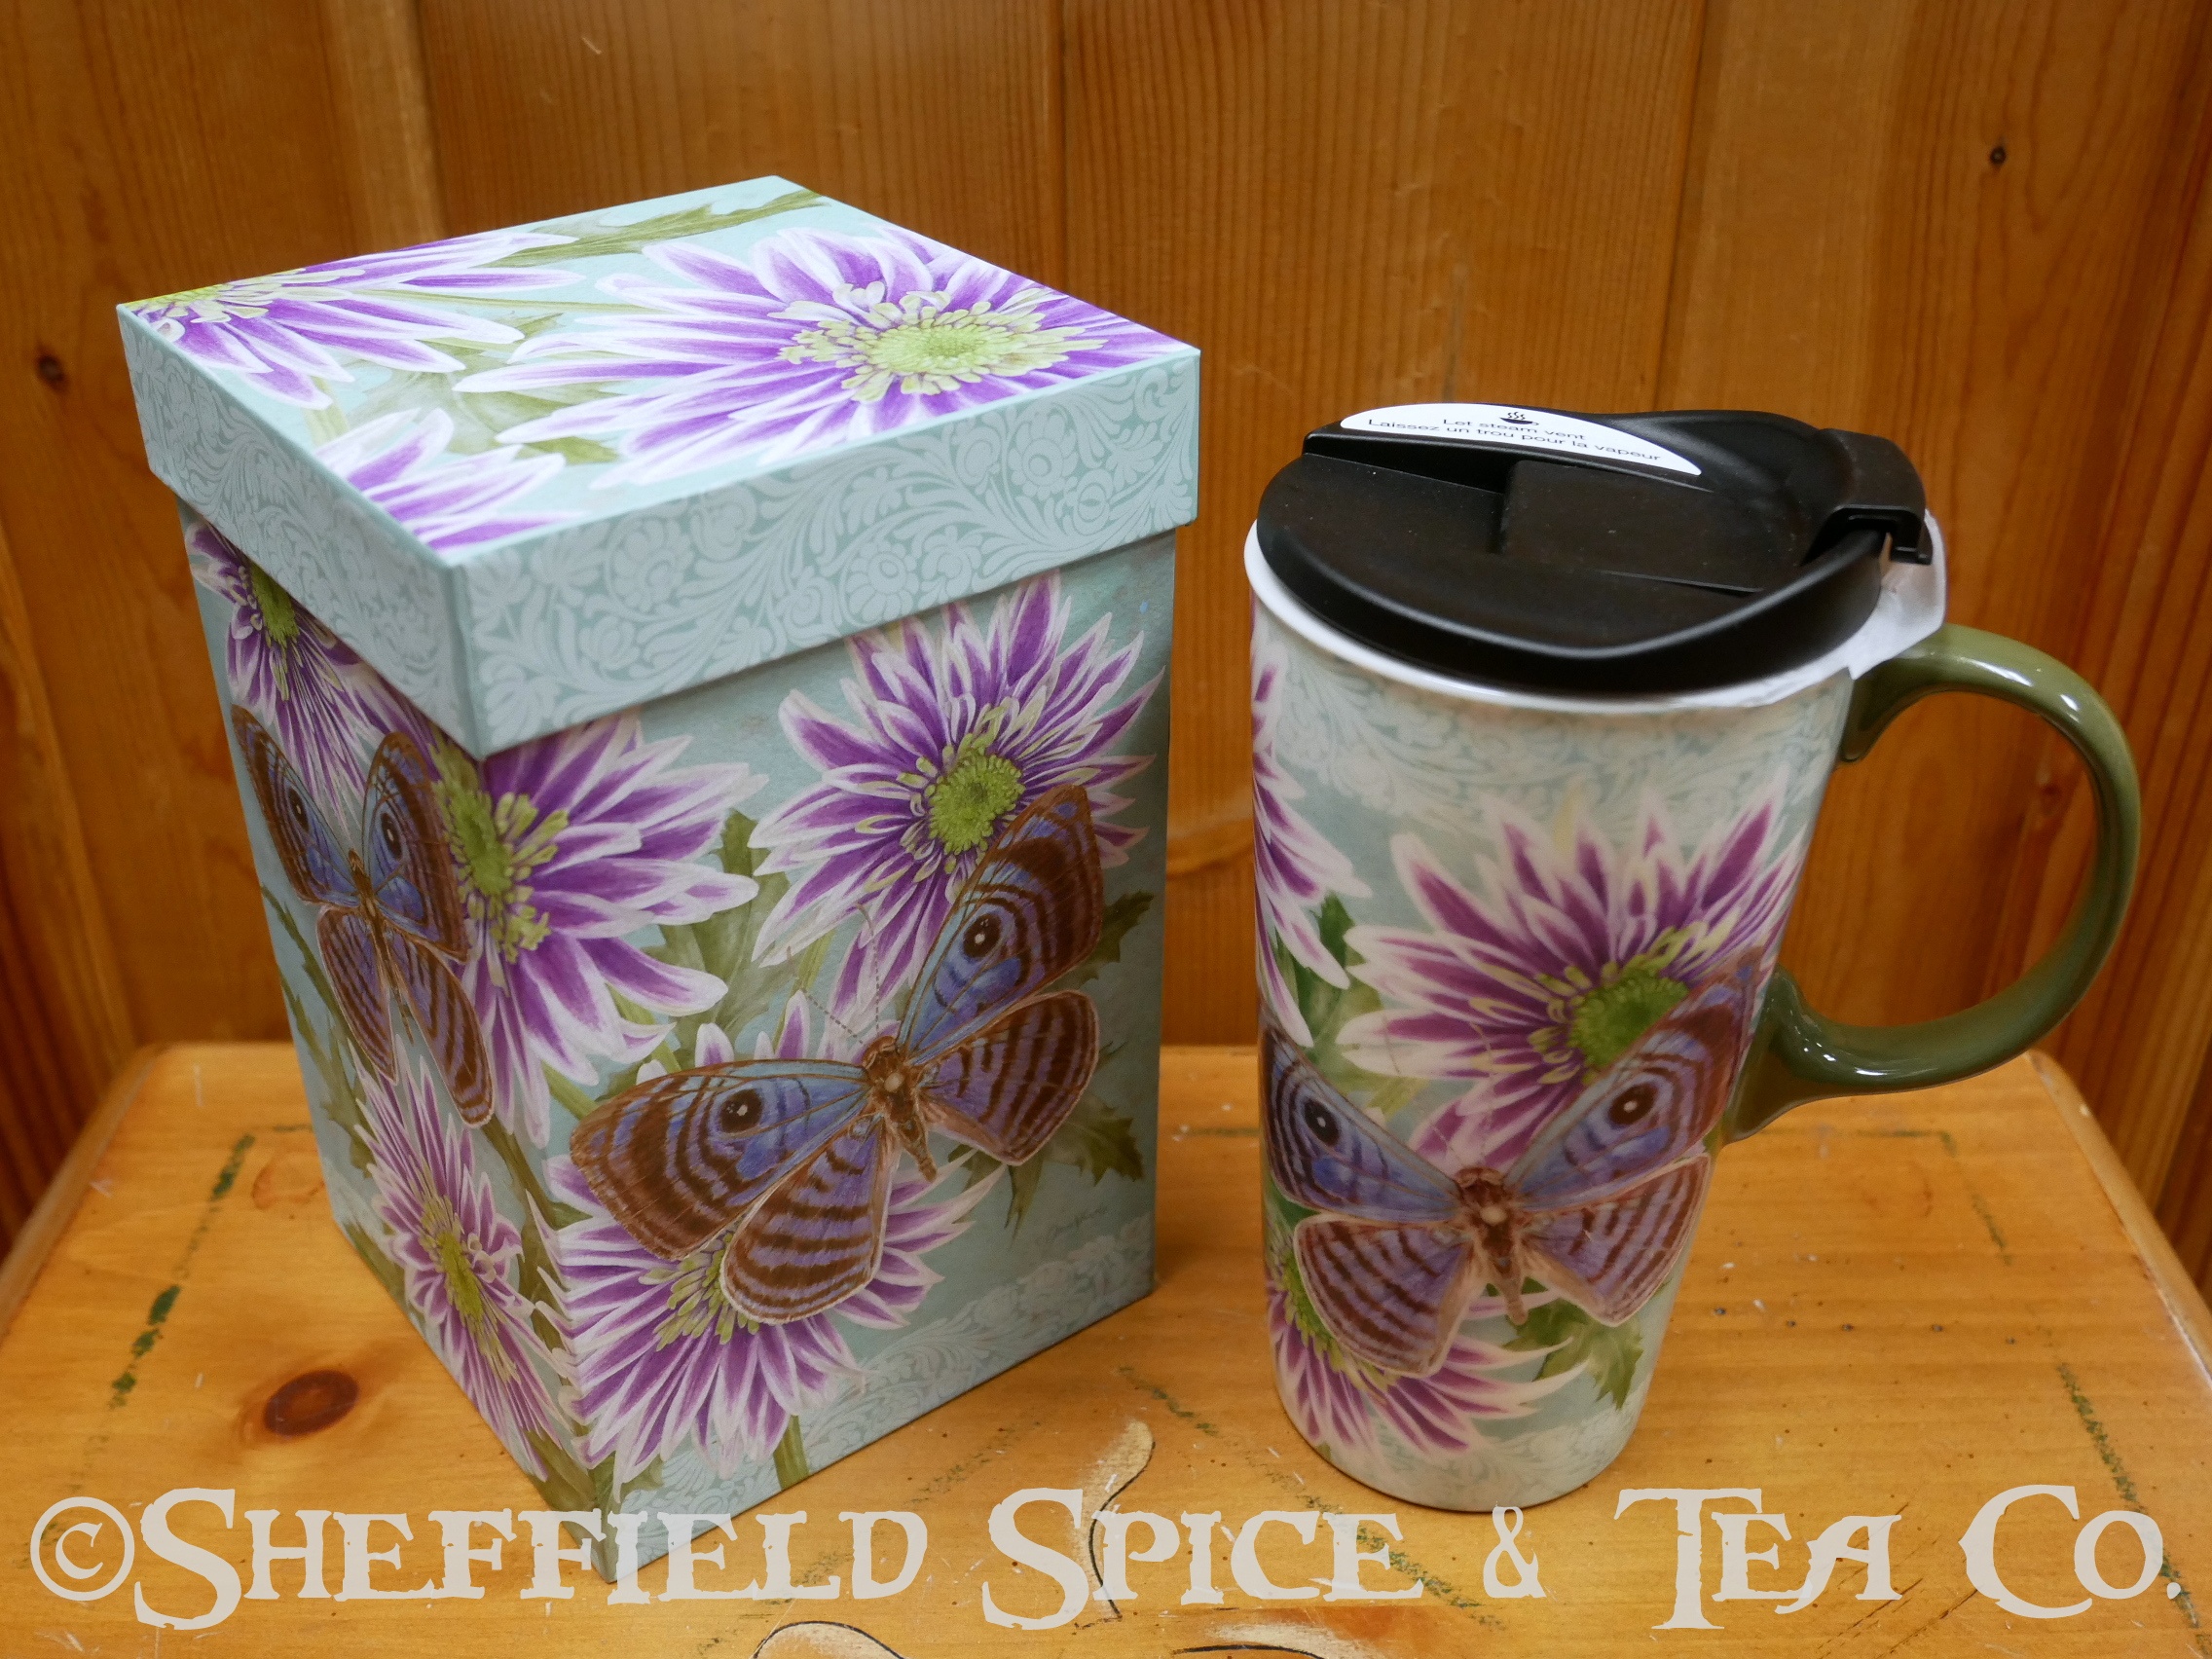 Libbey Clear Glass Tea Mugs - Sheffield Spice & Tea Co